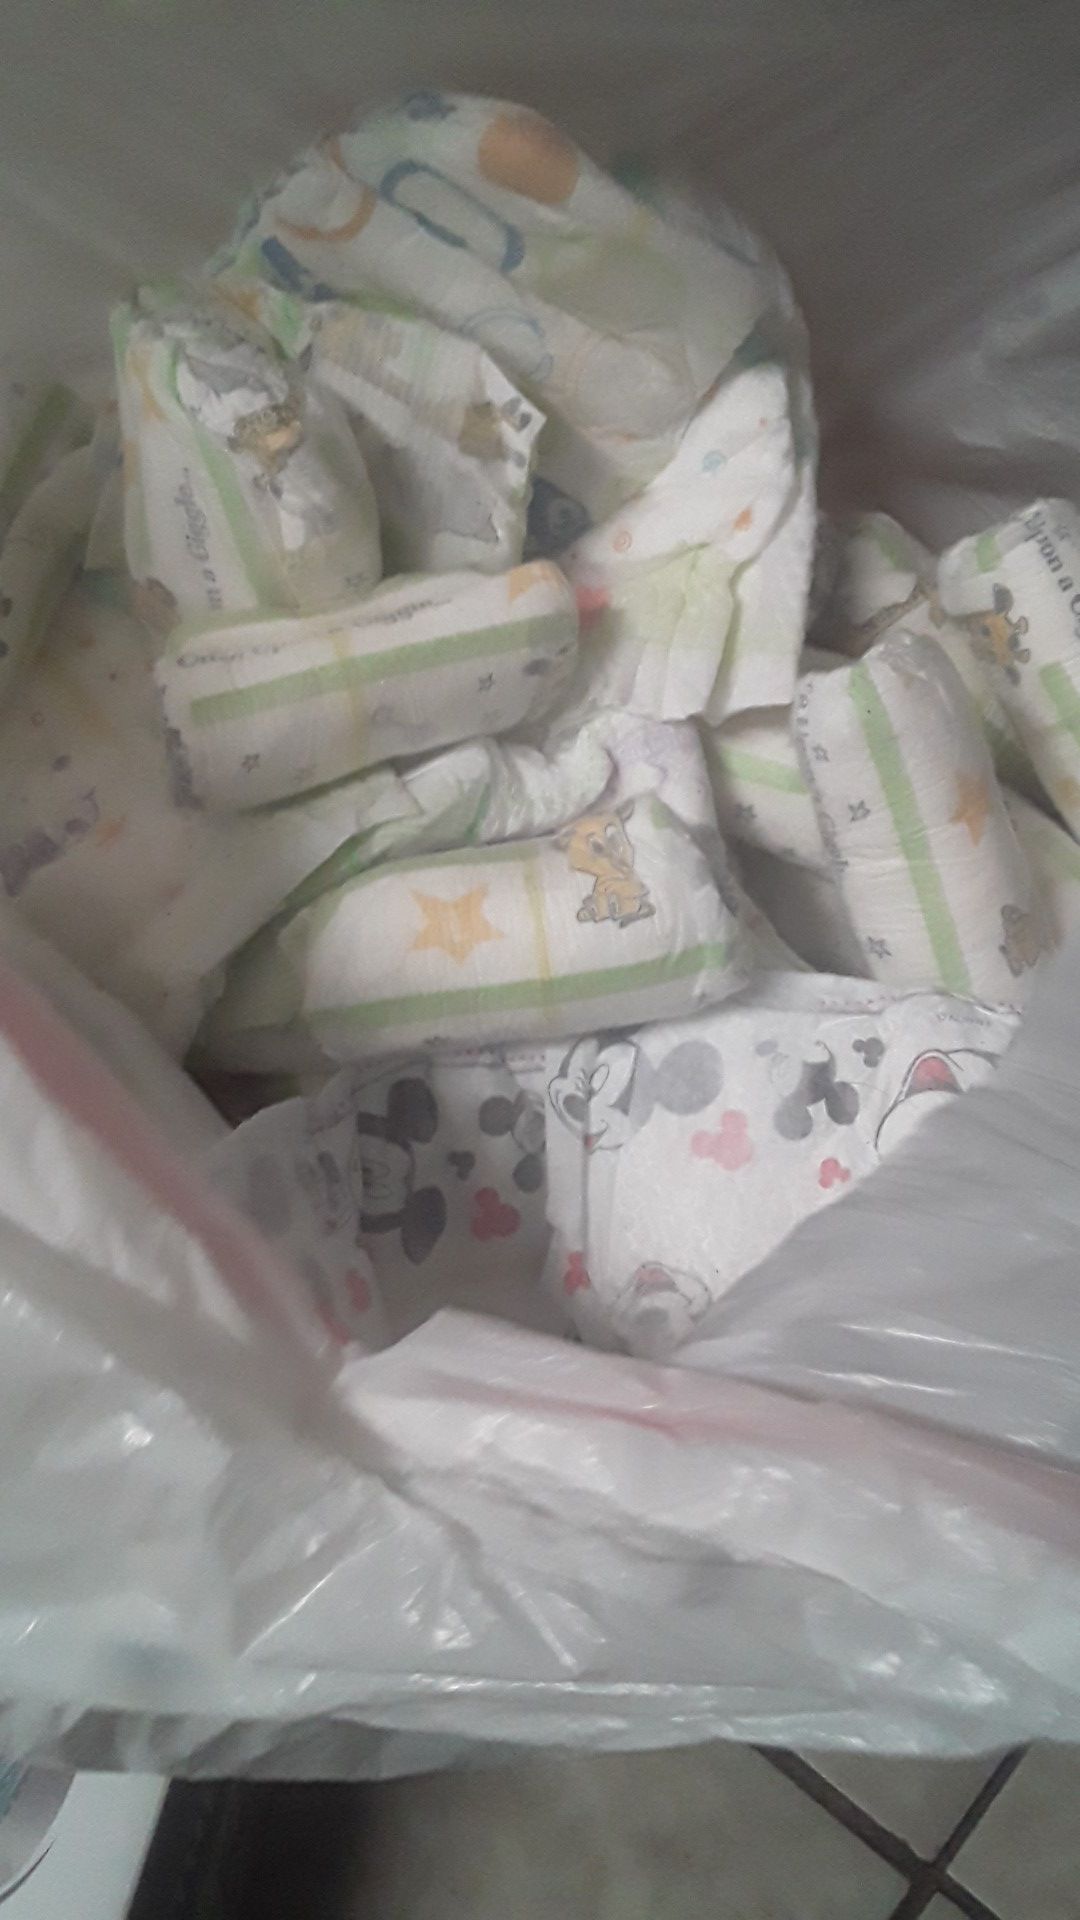 Various diapers